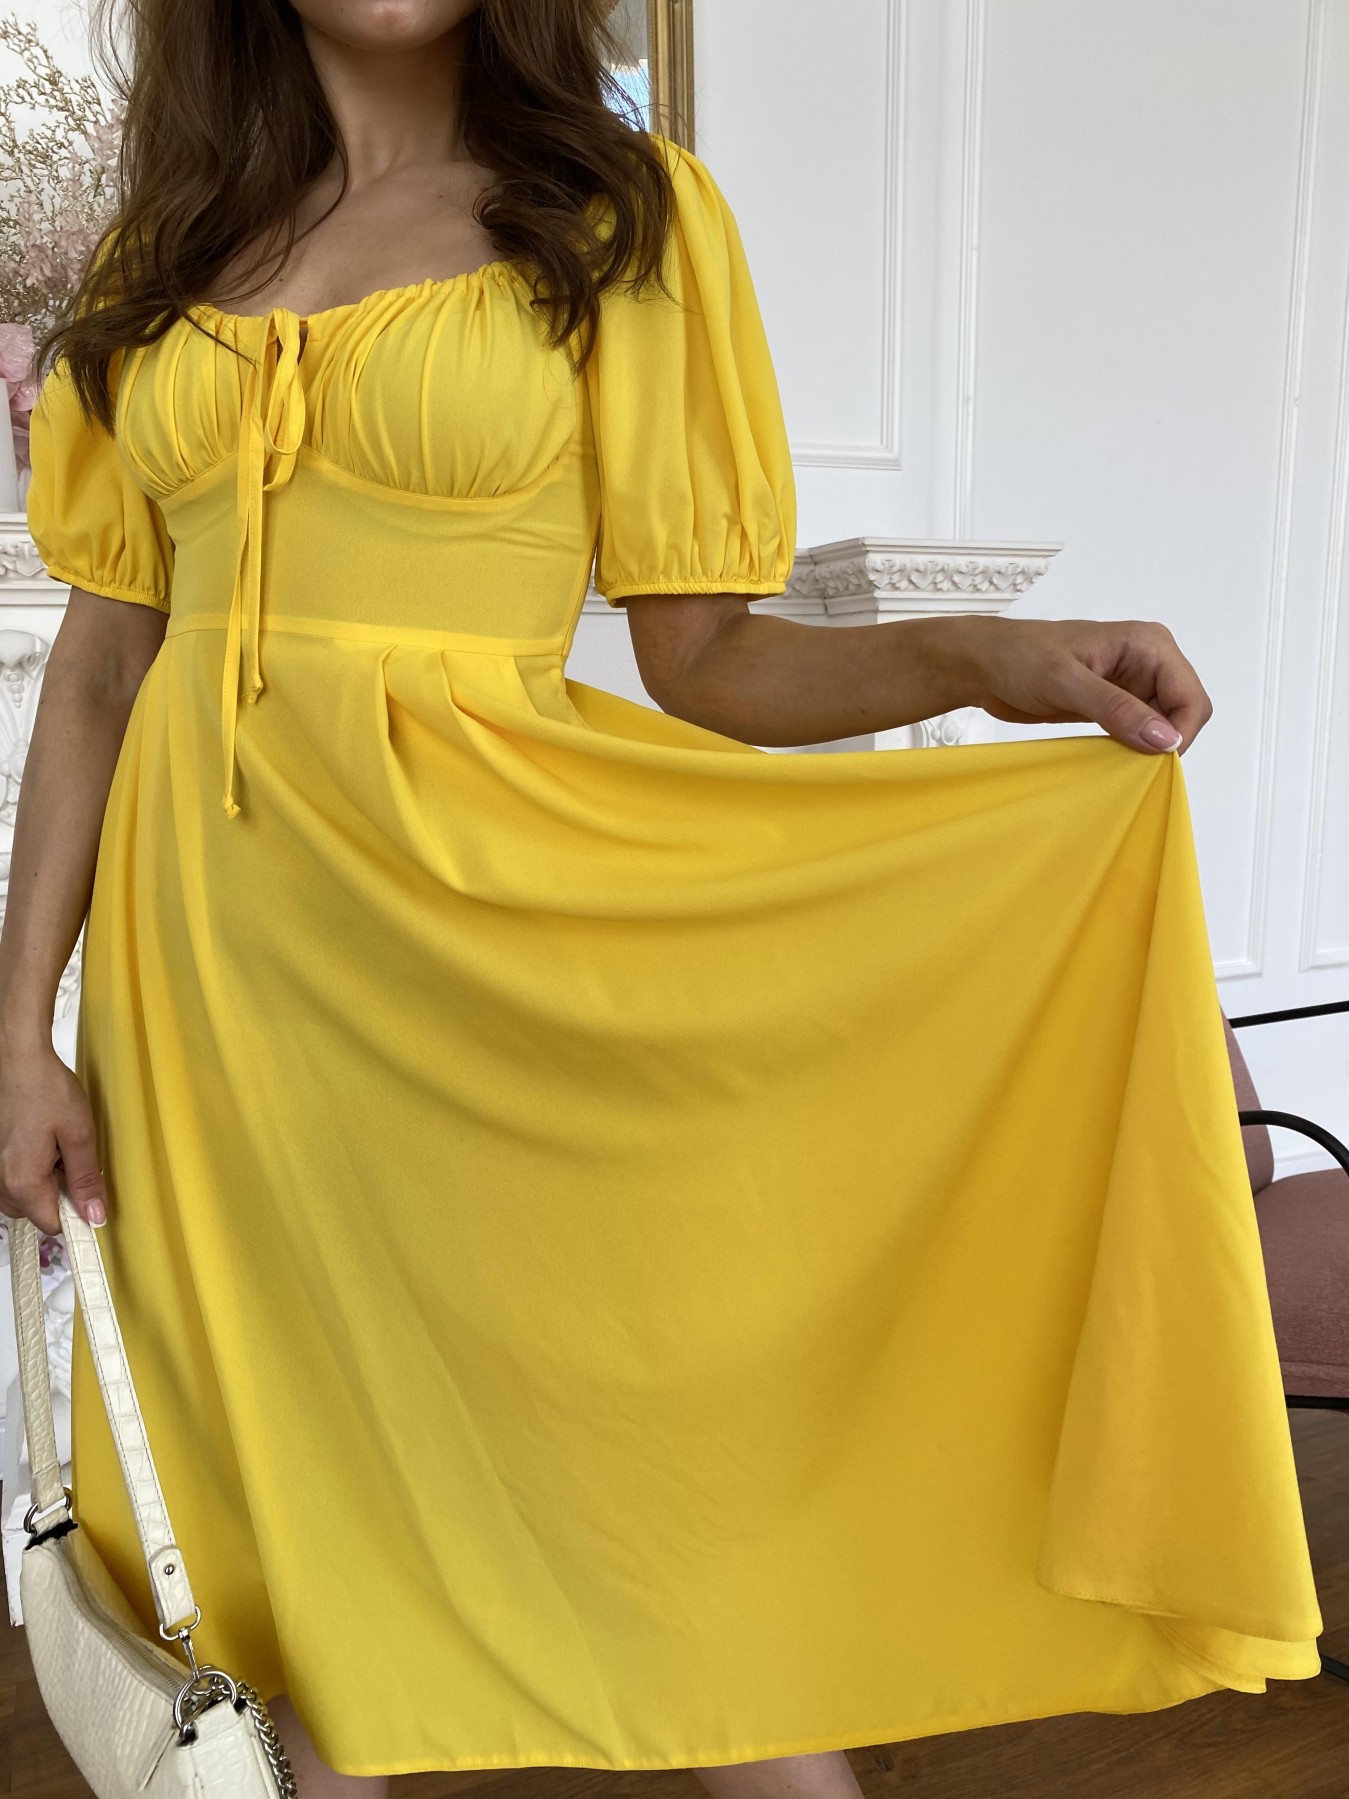 Кисес Миди платье из шифона креп 11443 АРТ. 48205 Цвет: Желтый 14 - фото 3, интернет магазин tm-modus.ru